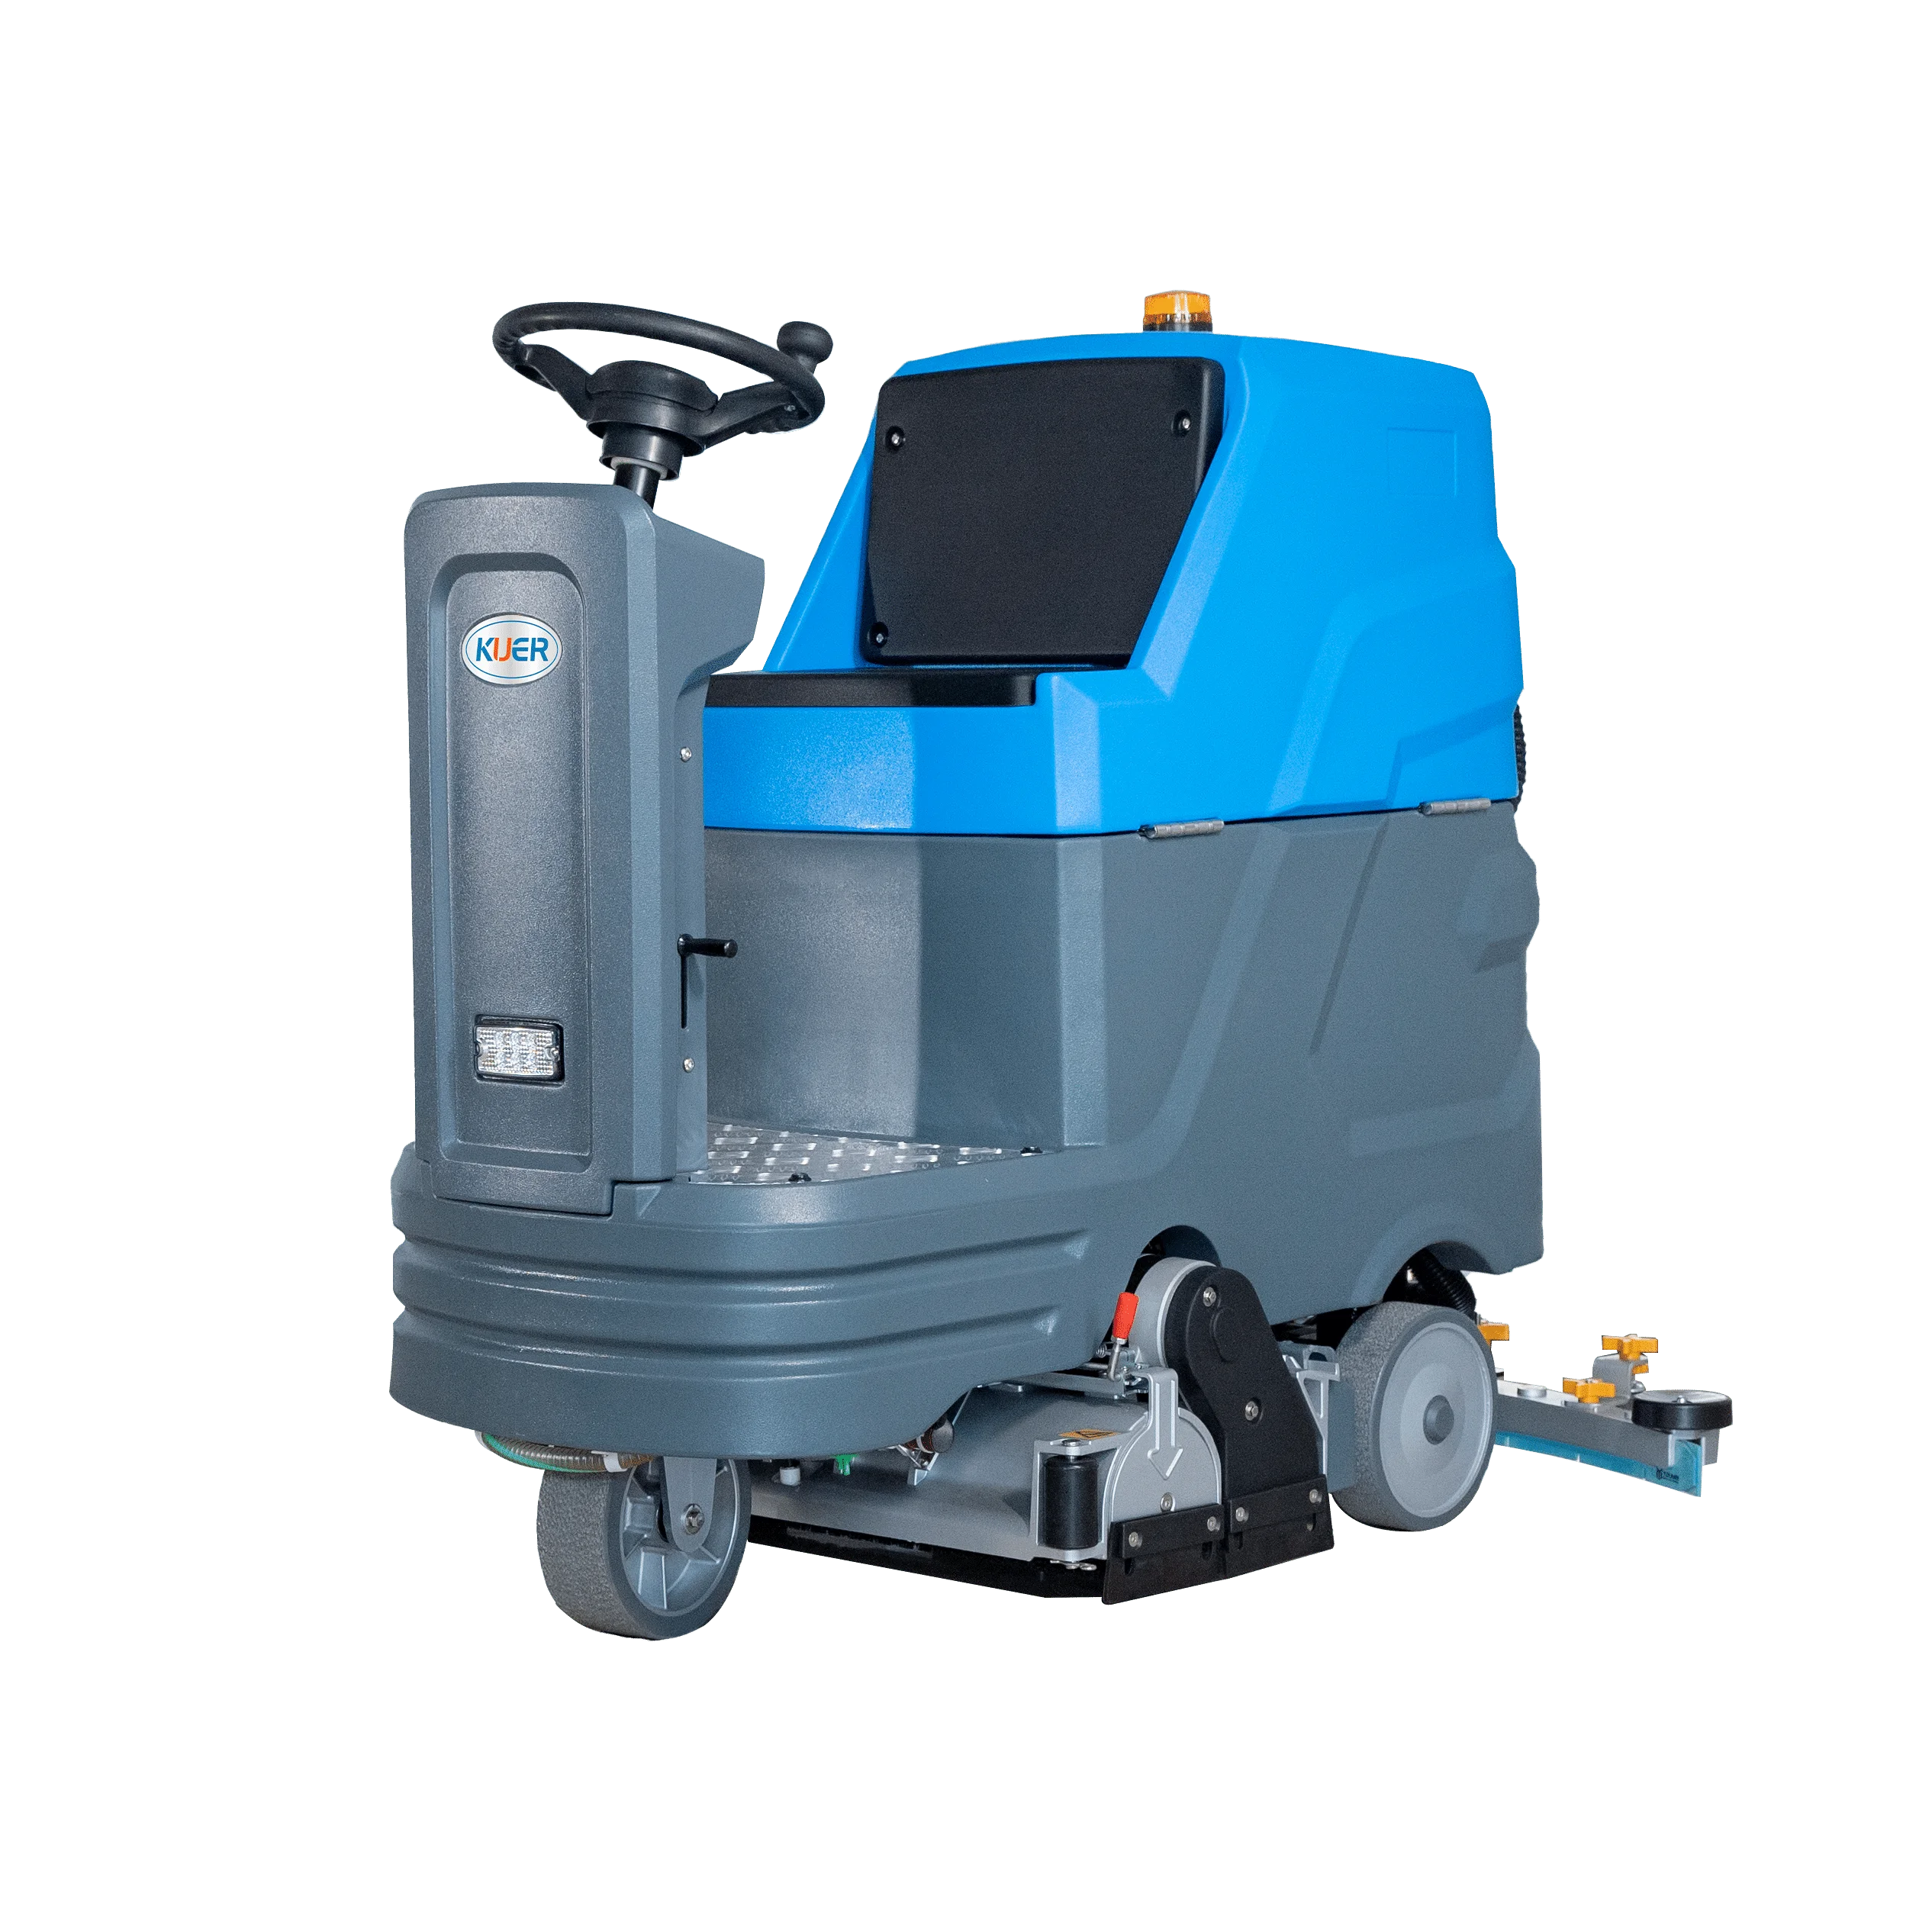 KUER Cylindrical brush Ride-on Battery-Powered Sweeper-Scrubber | KR-G650 43,060 ft²/hr